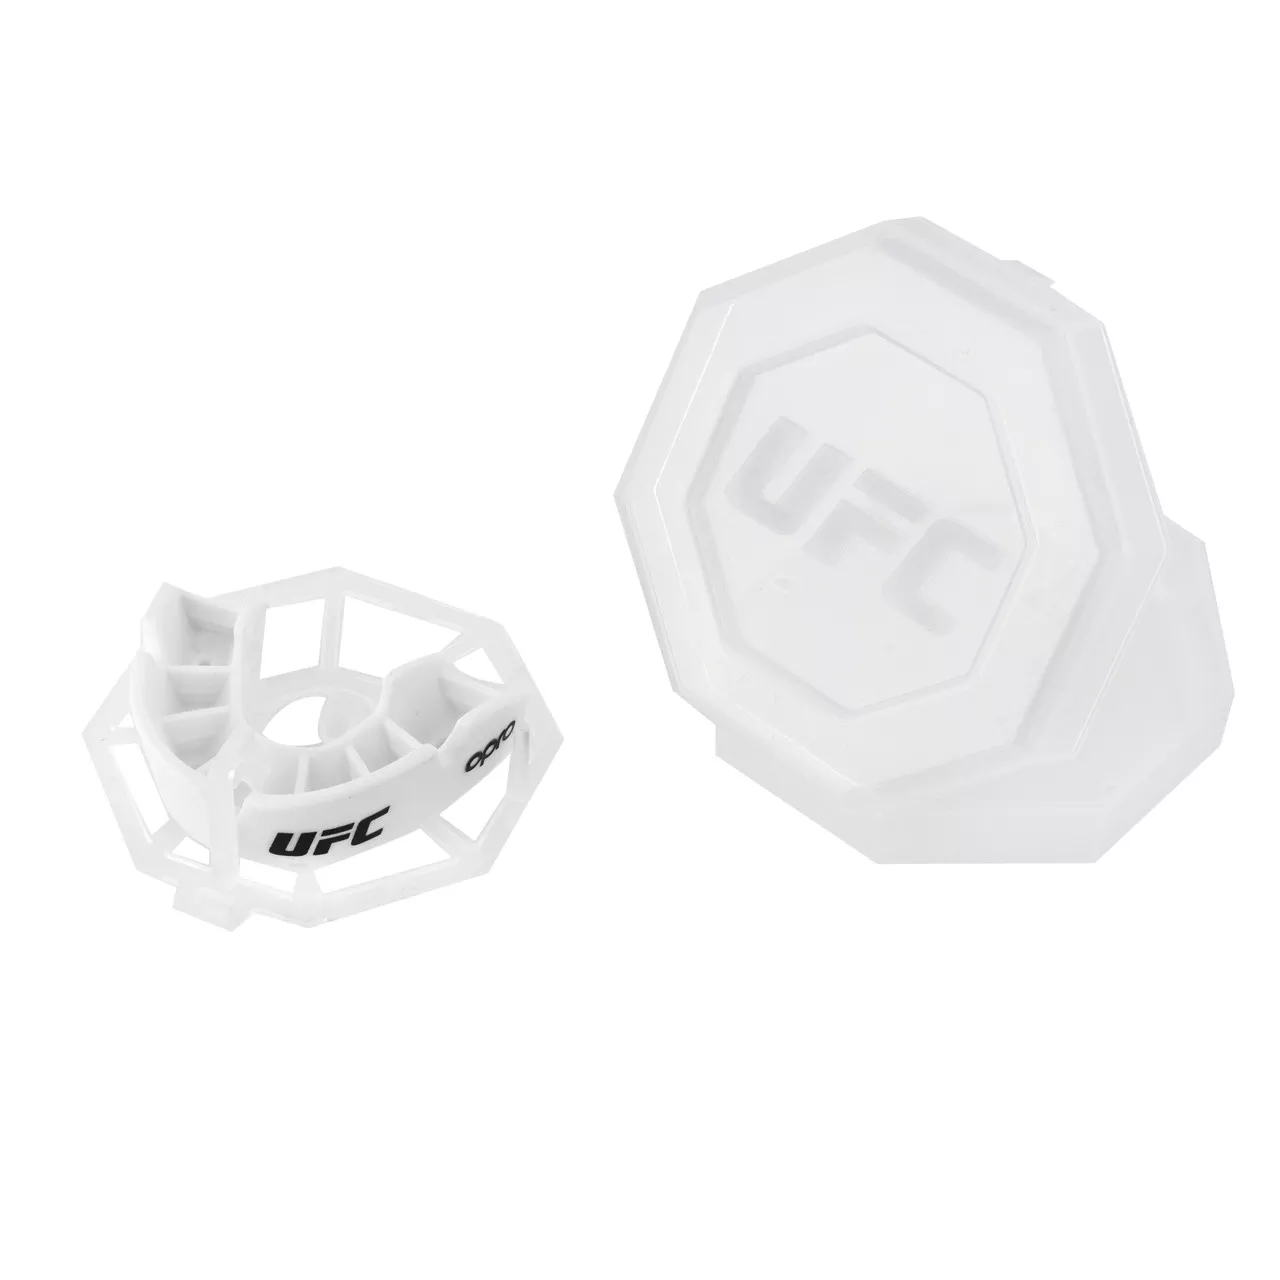 Капа OPRO Bronze UFC Hologram White (art.002258002)-взрослая